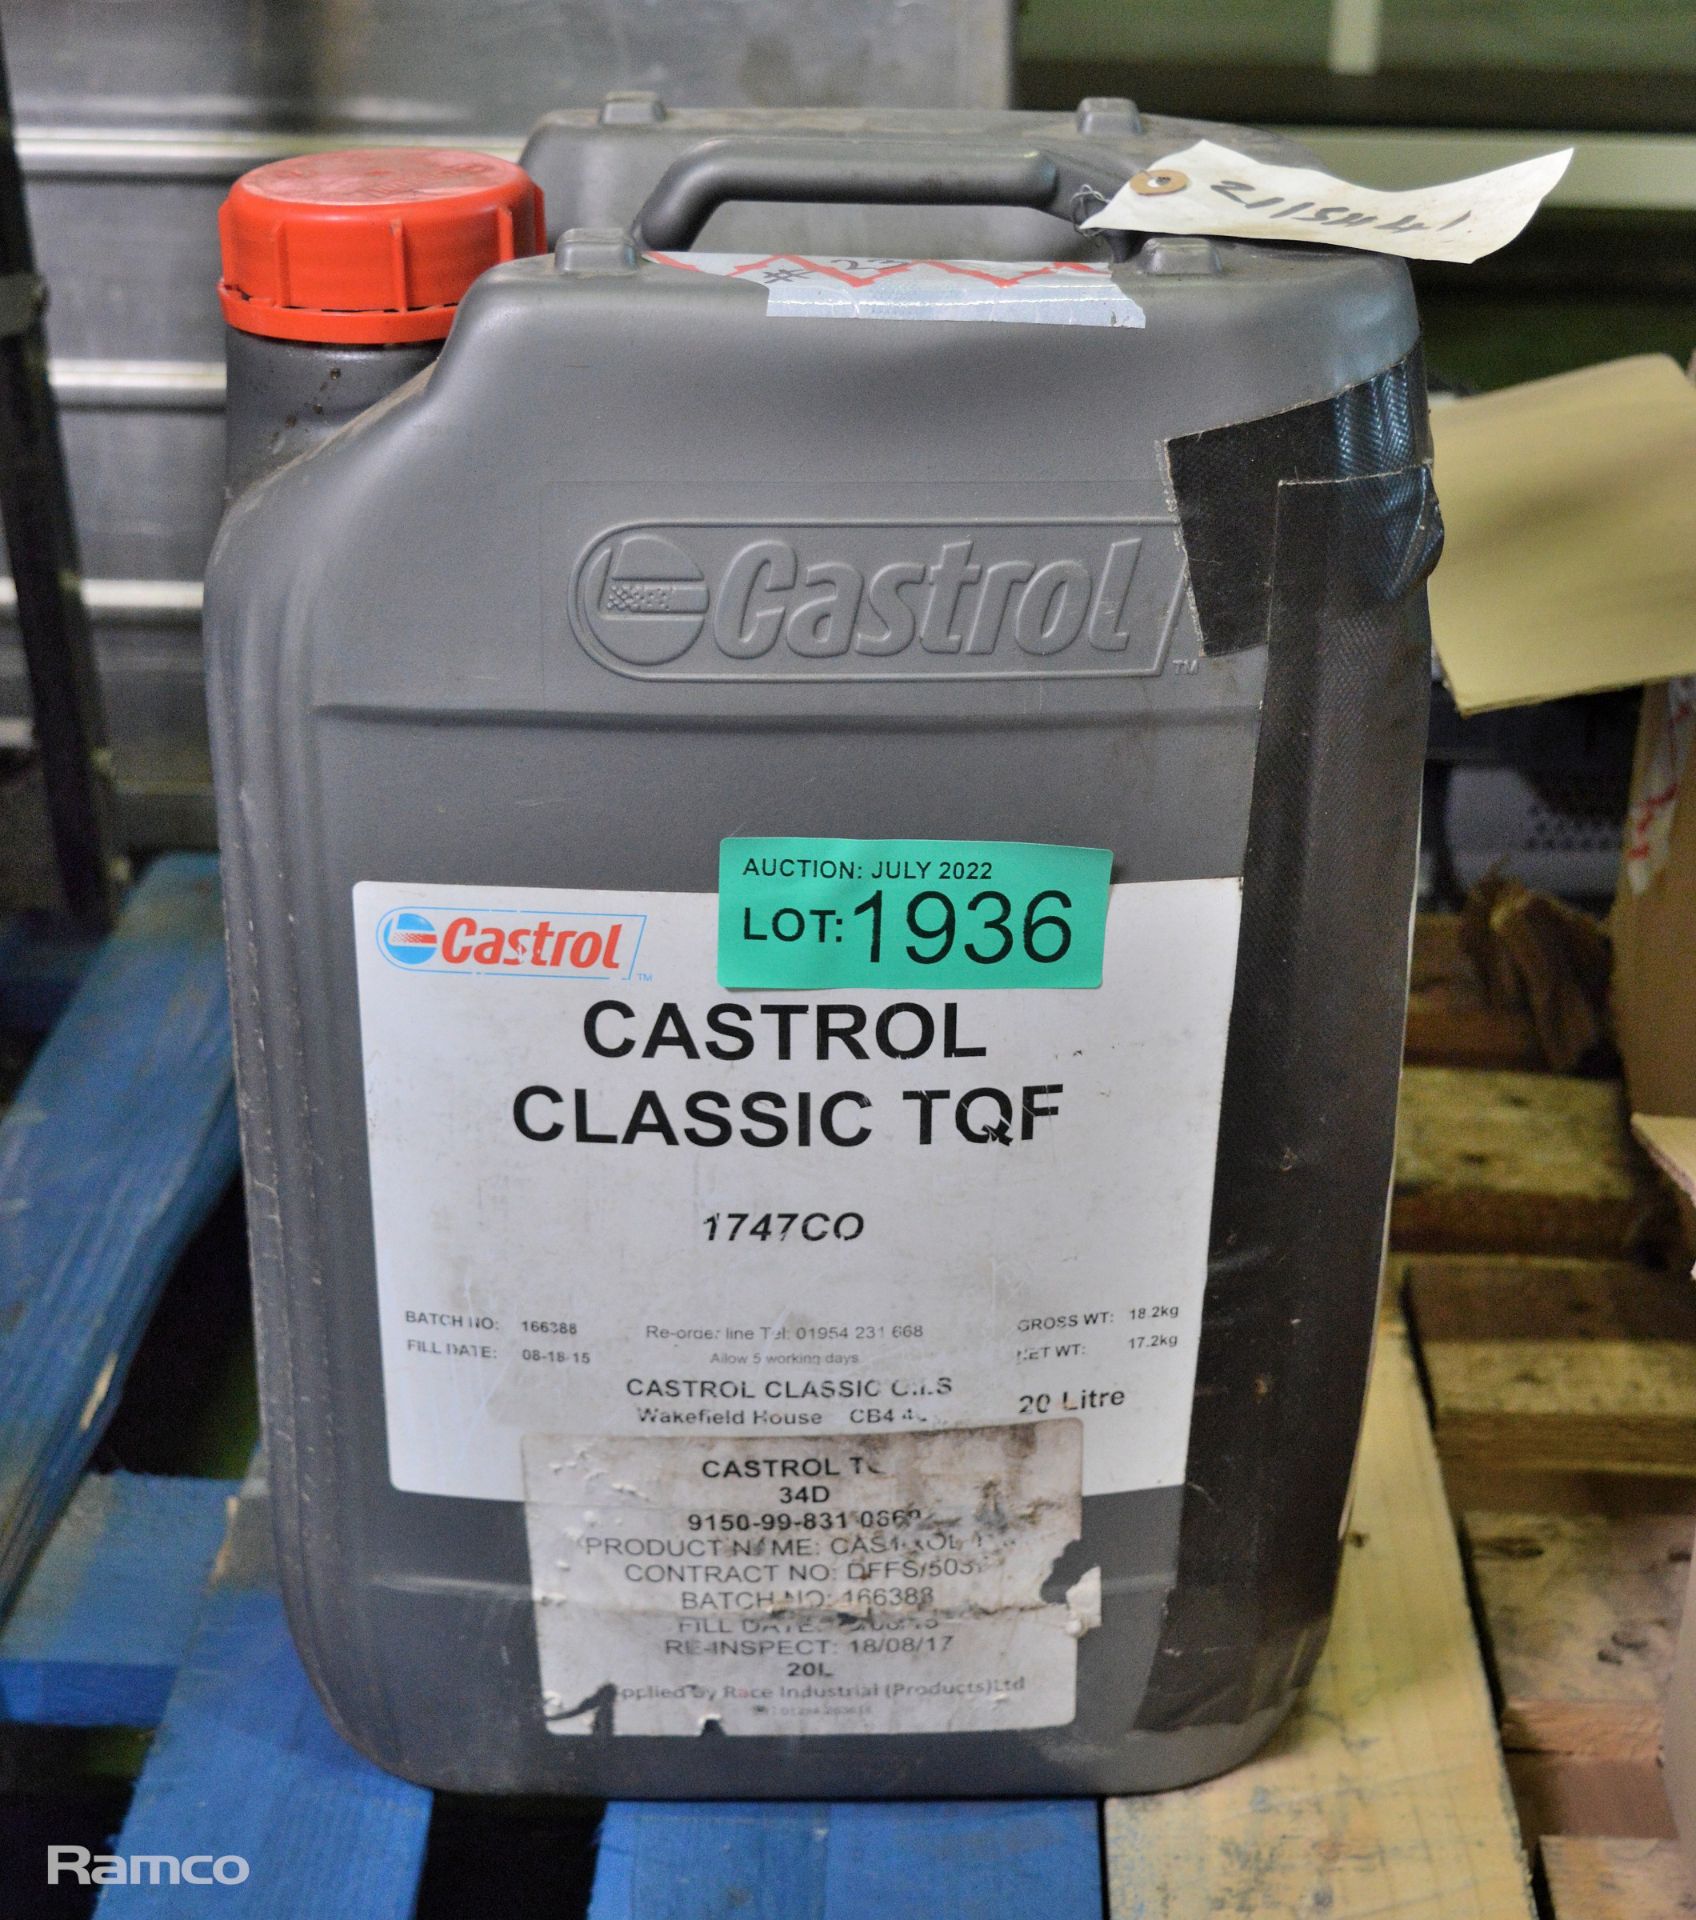 20LT Castrol classic TQF power steering fluid